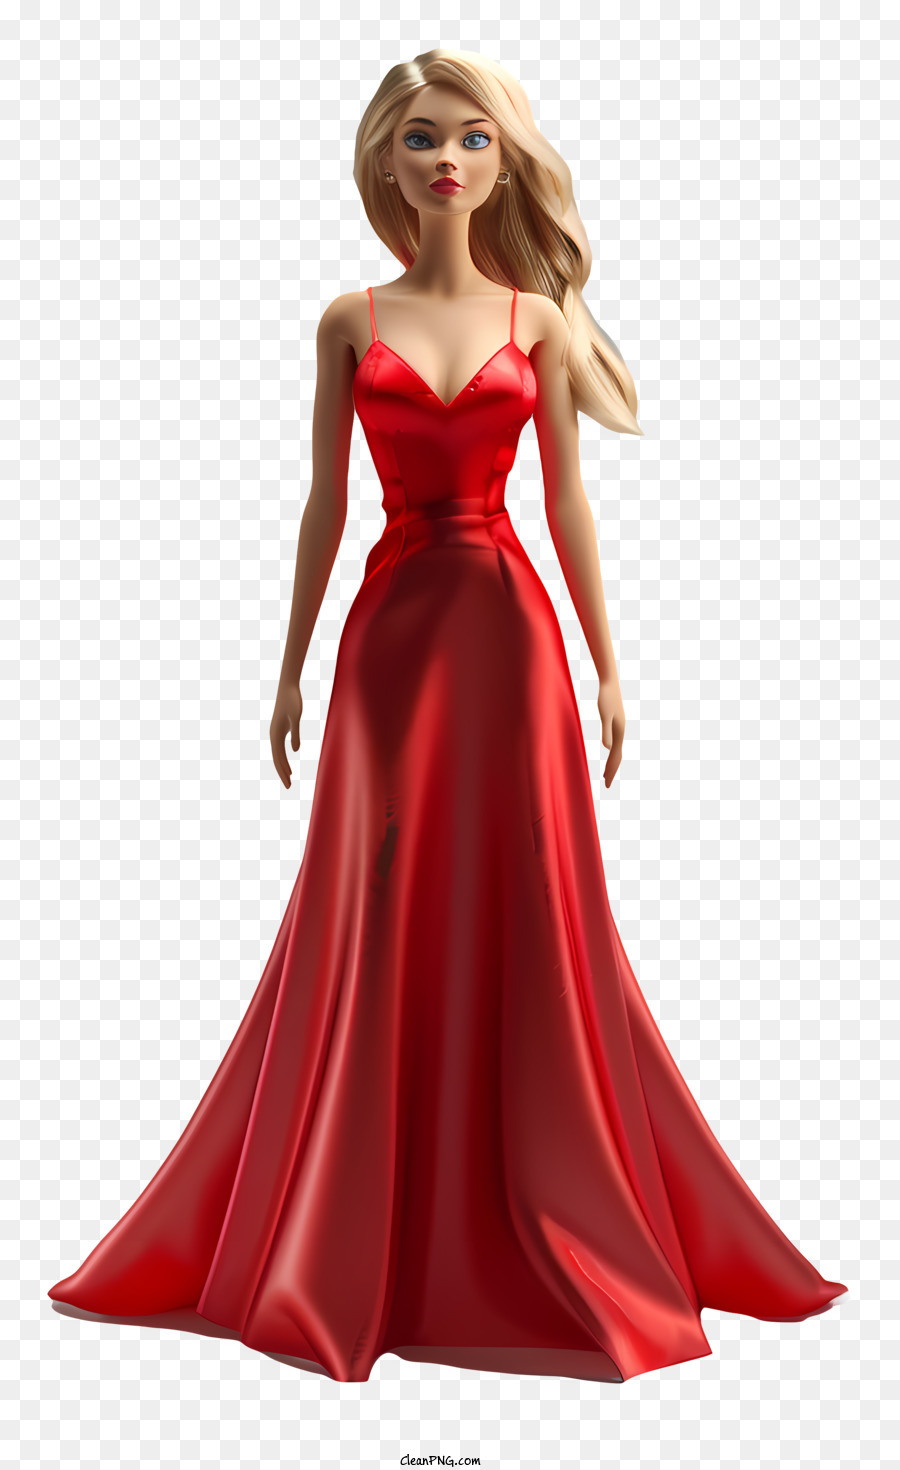 Barbie Floral Fashion Red Dress Doll - Walmart.com